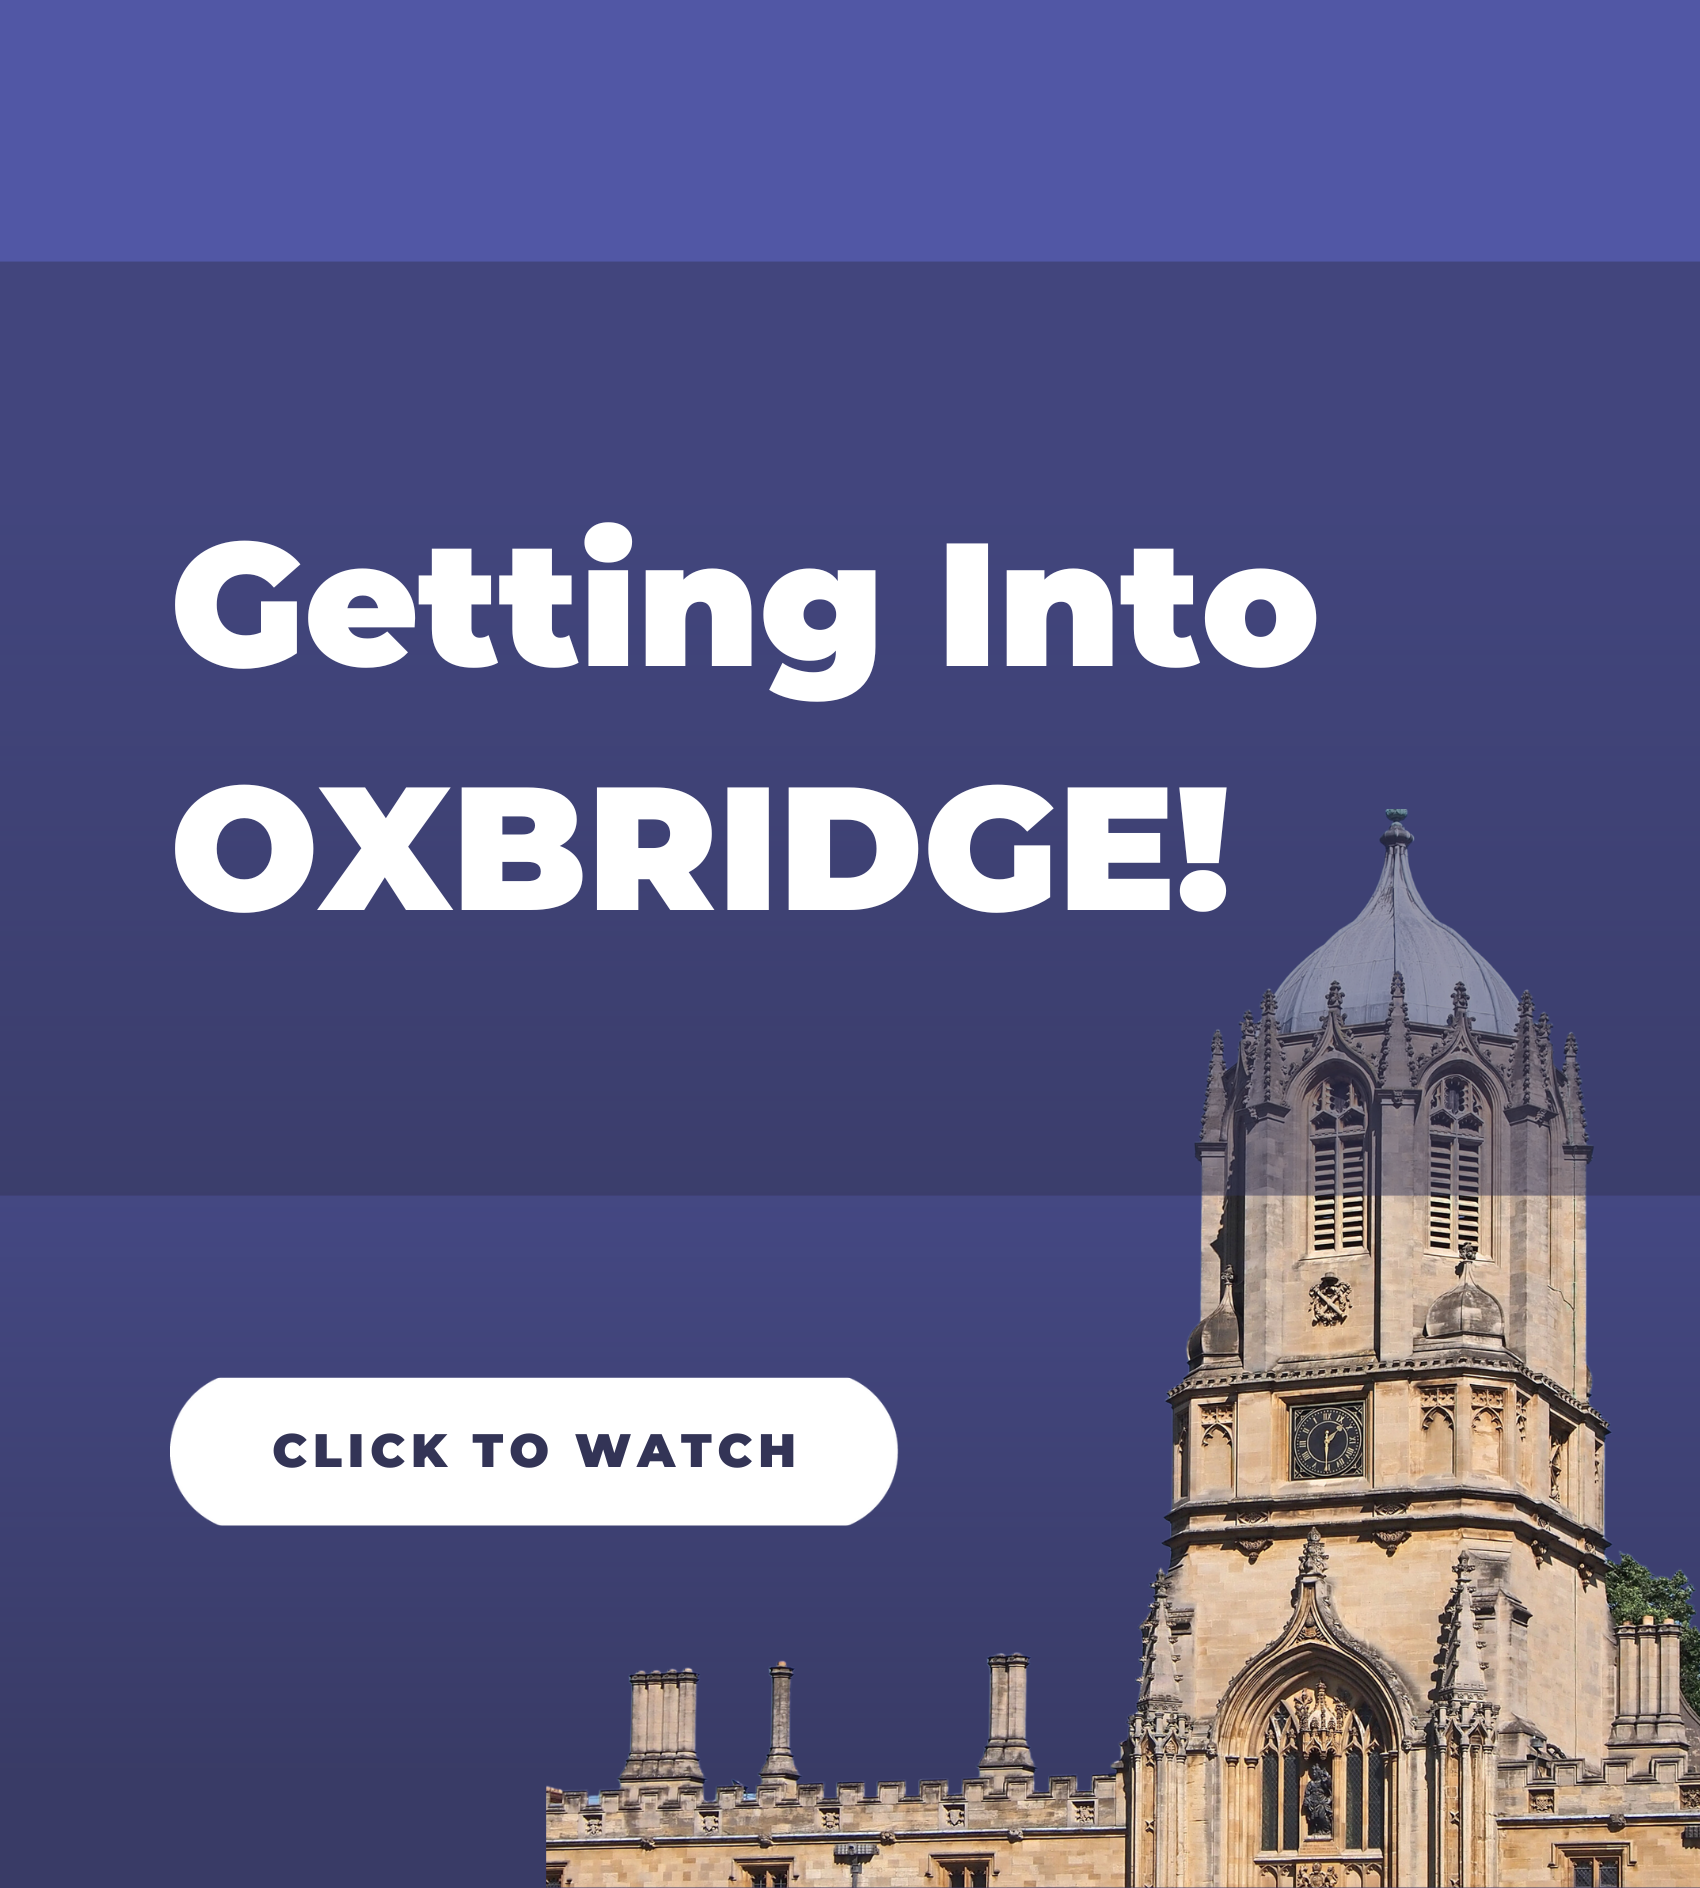 Getting Into OXBRIDGE